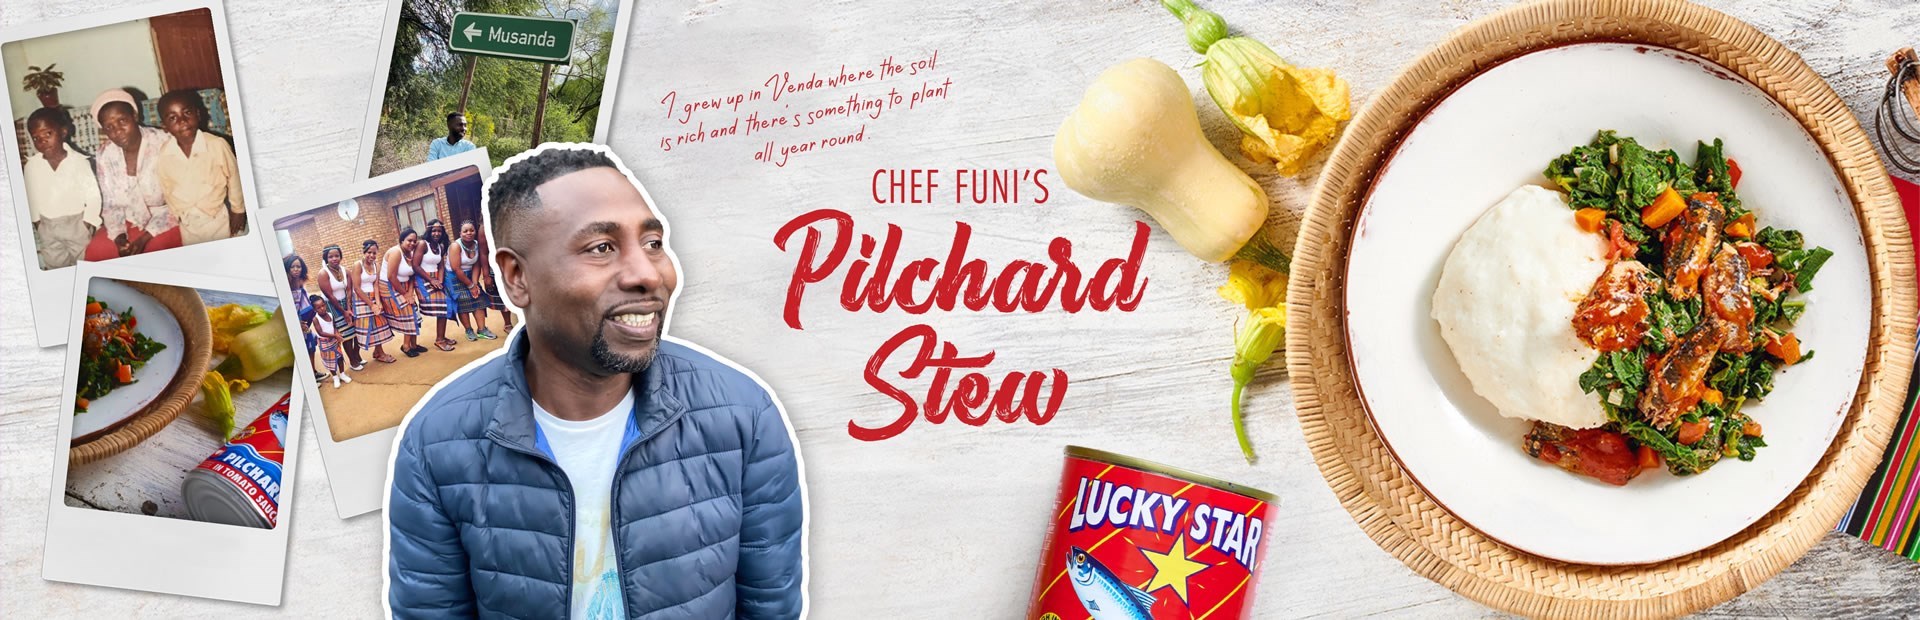 CHEF FUNI’S Pilchard Stew